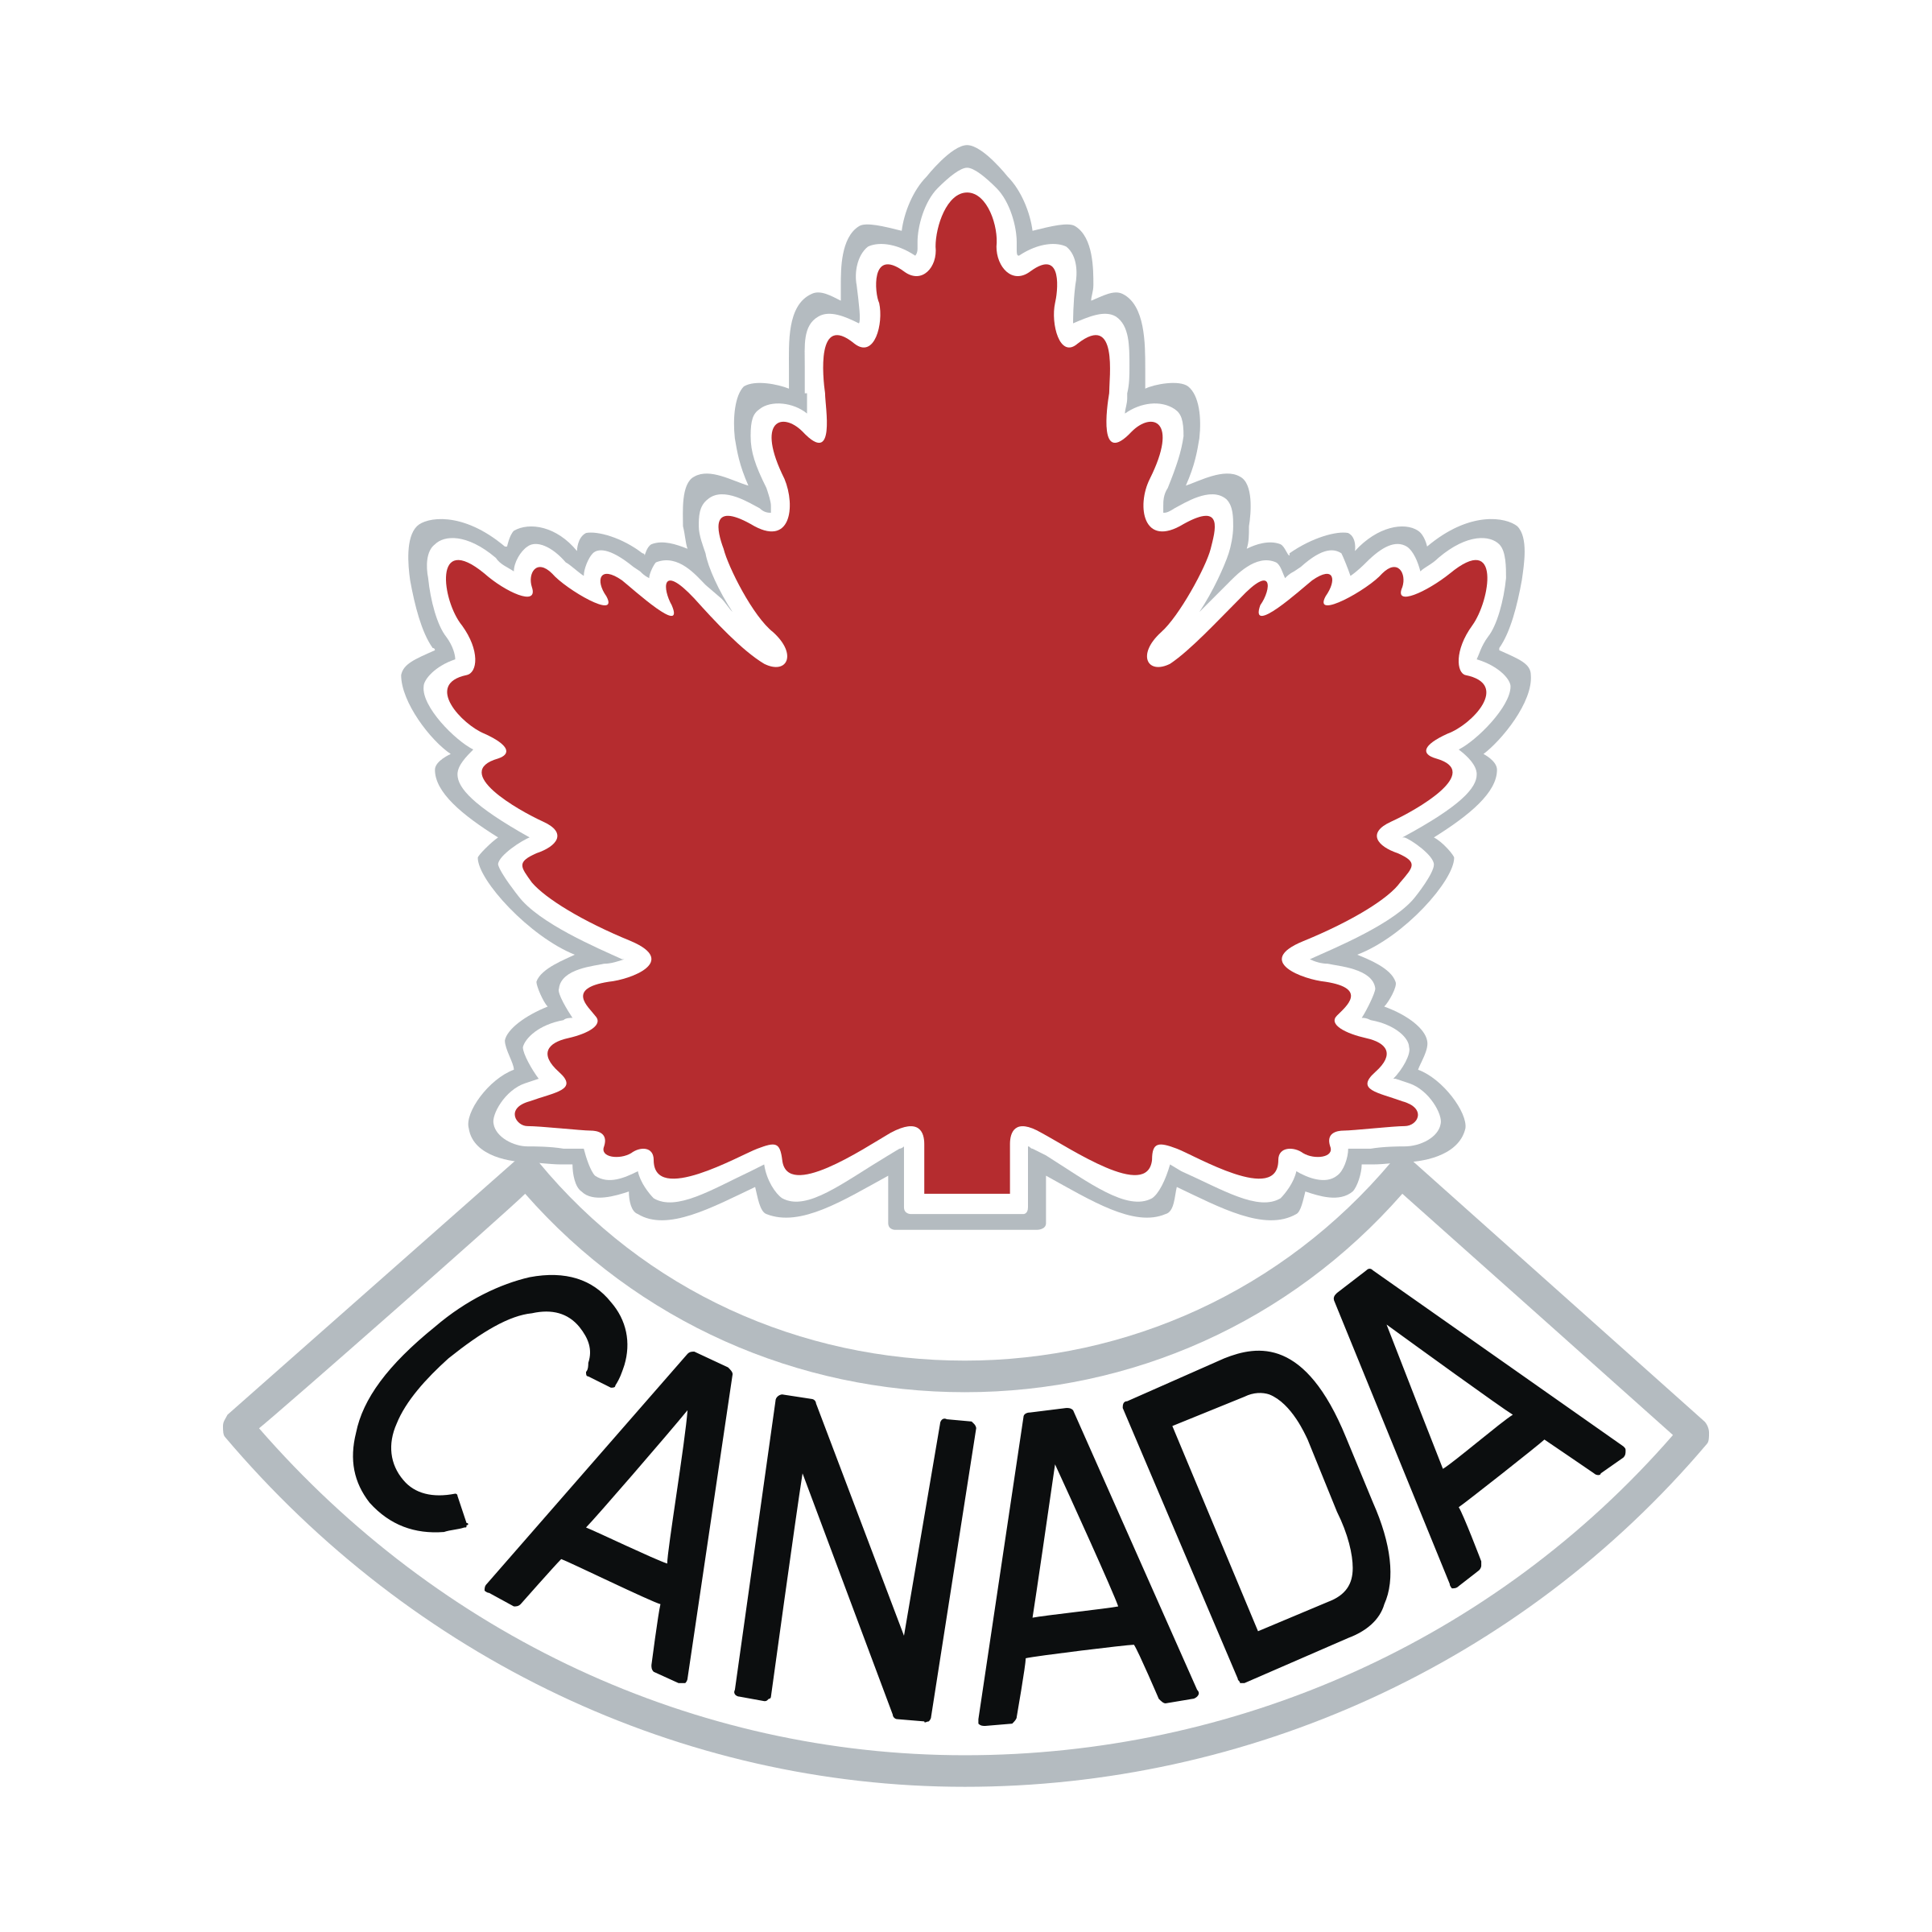 Canada Logo - Canada Logo PNG Transparent & SVG Vector - Freebie Supply